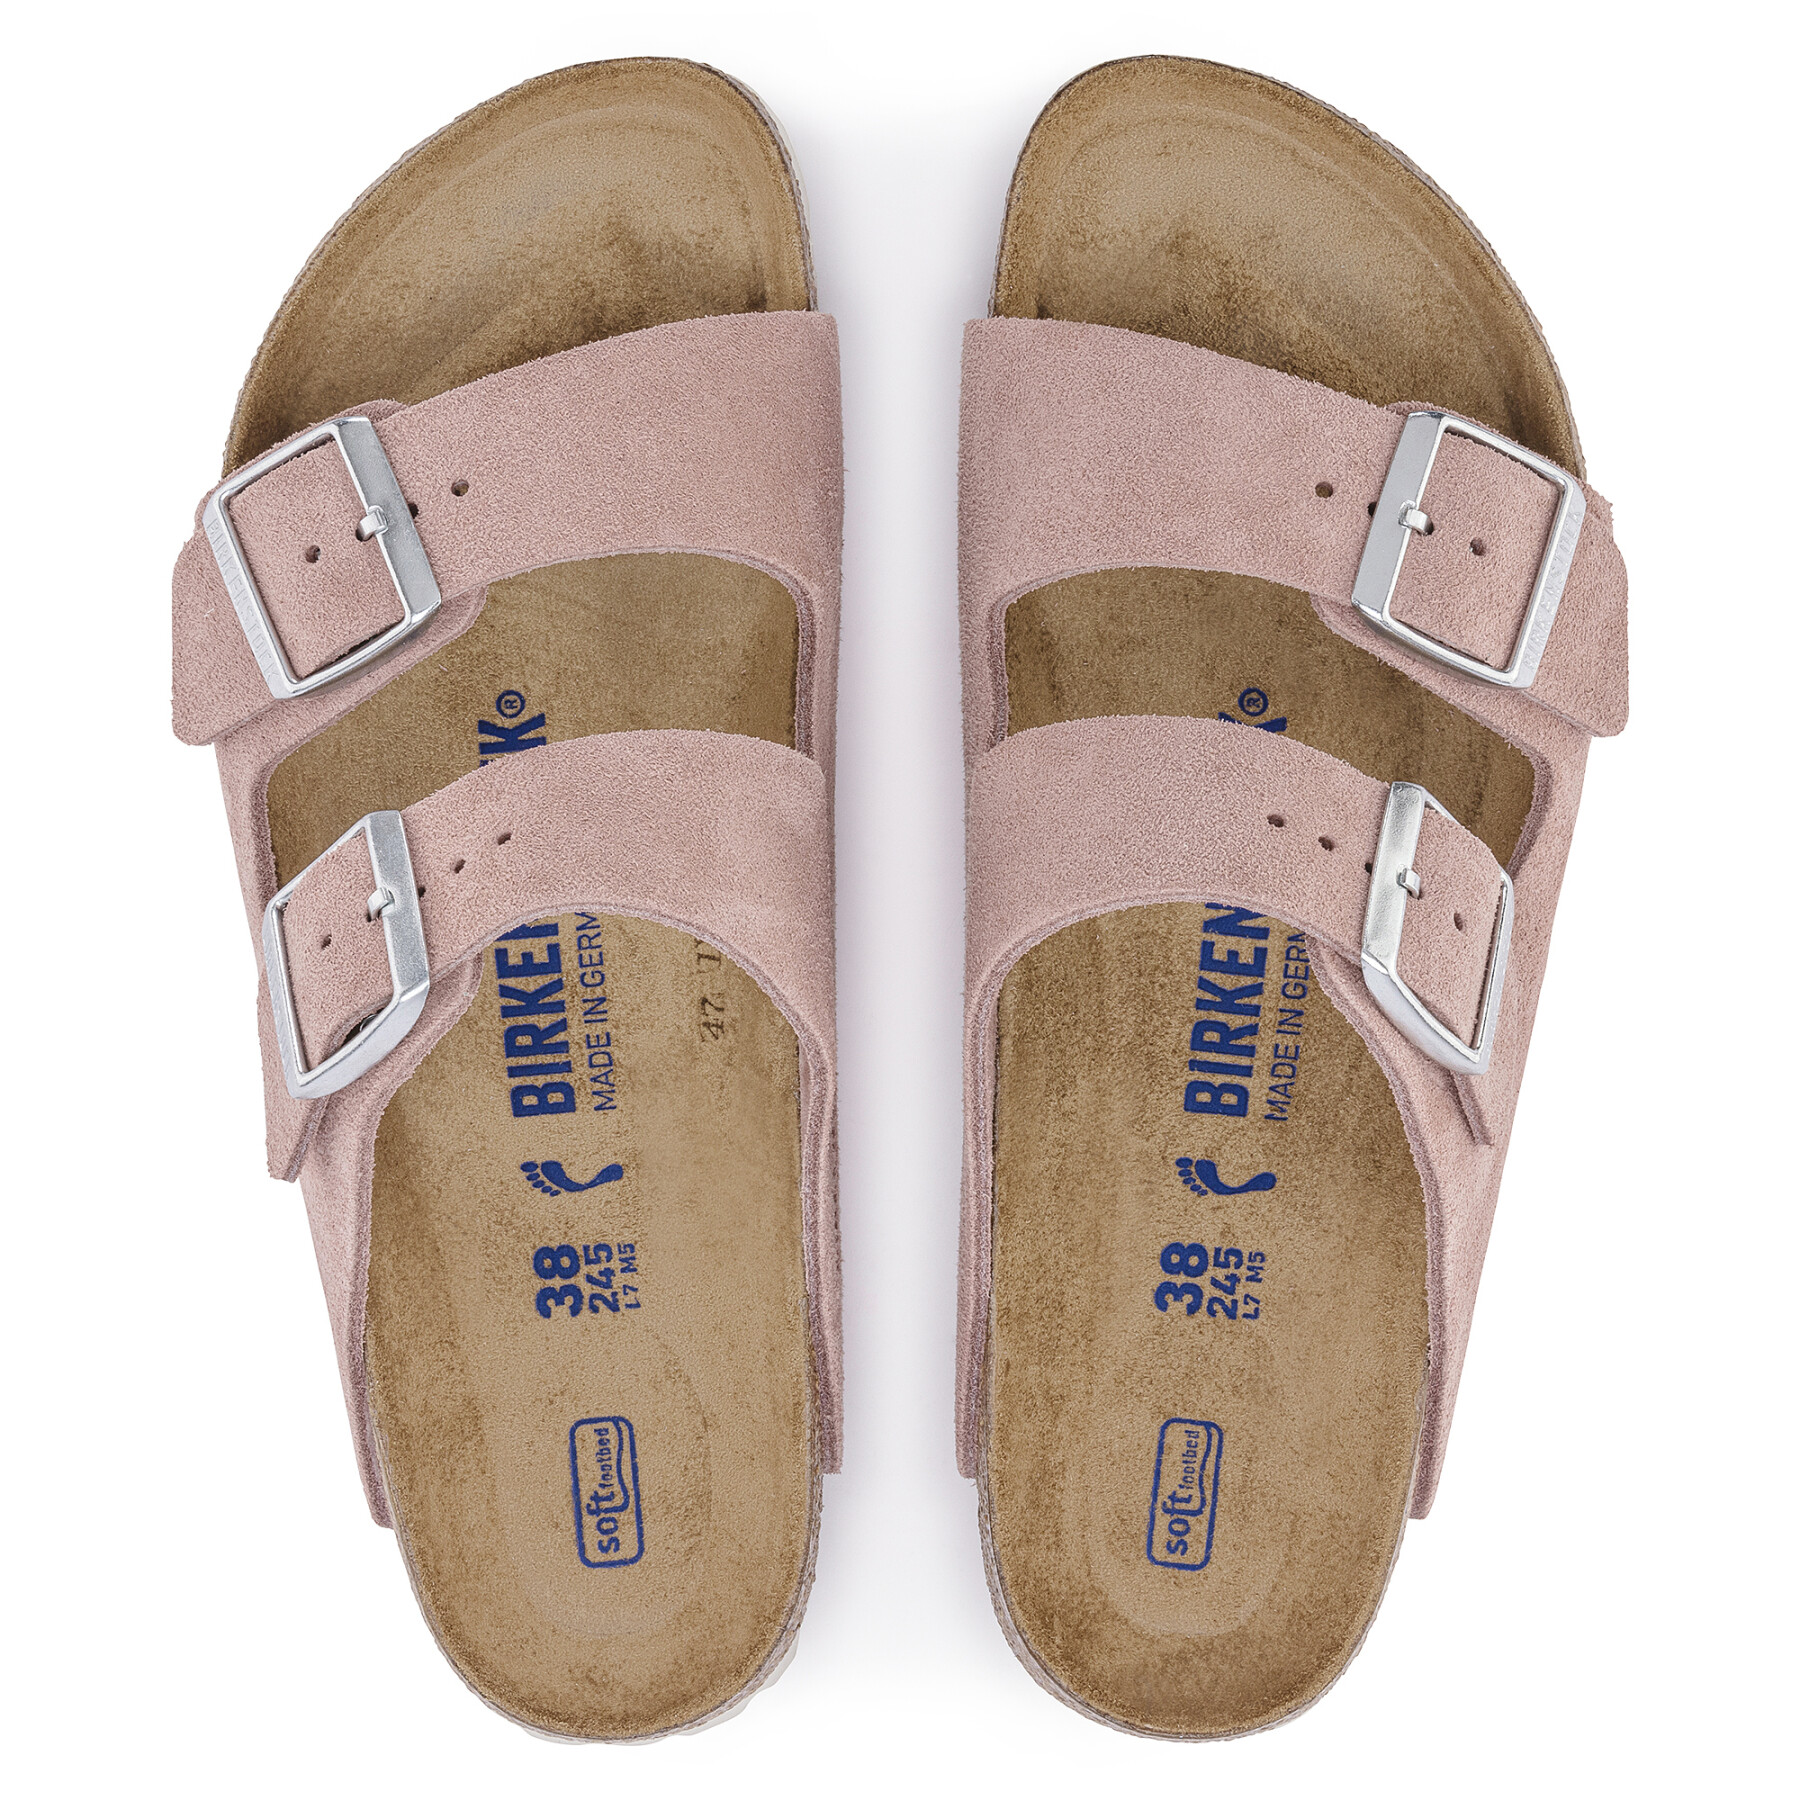 Women's sandals Birkenstock Arizona Soft Footbed Suede Leather